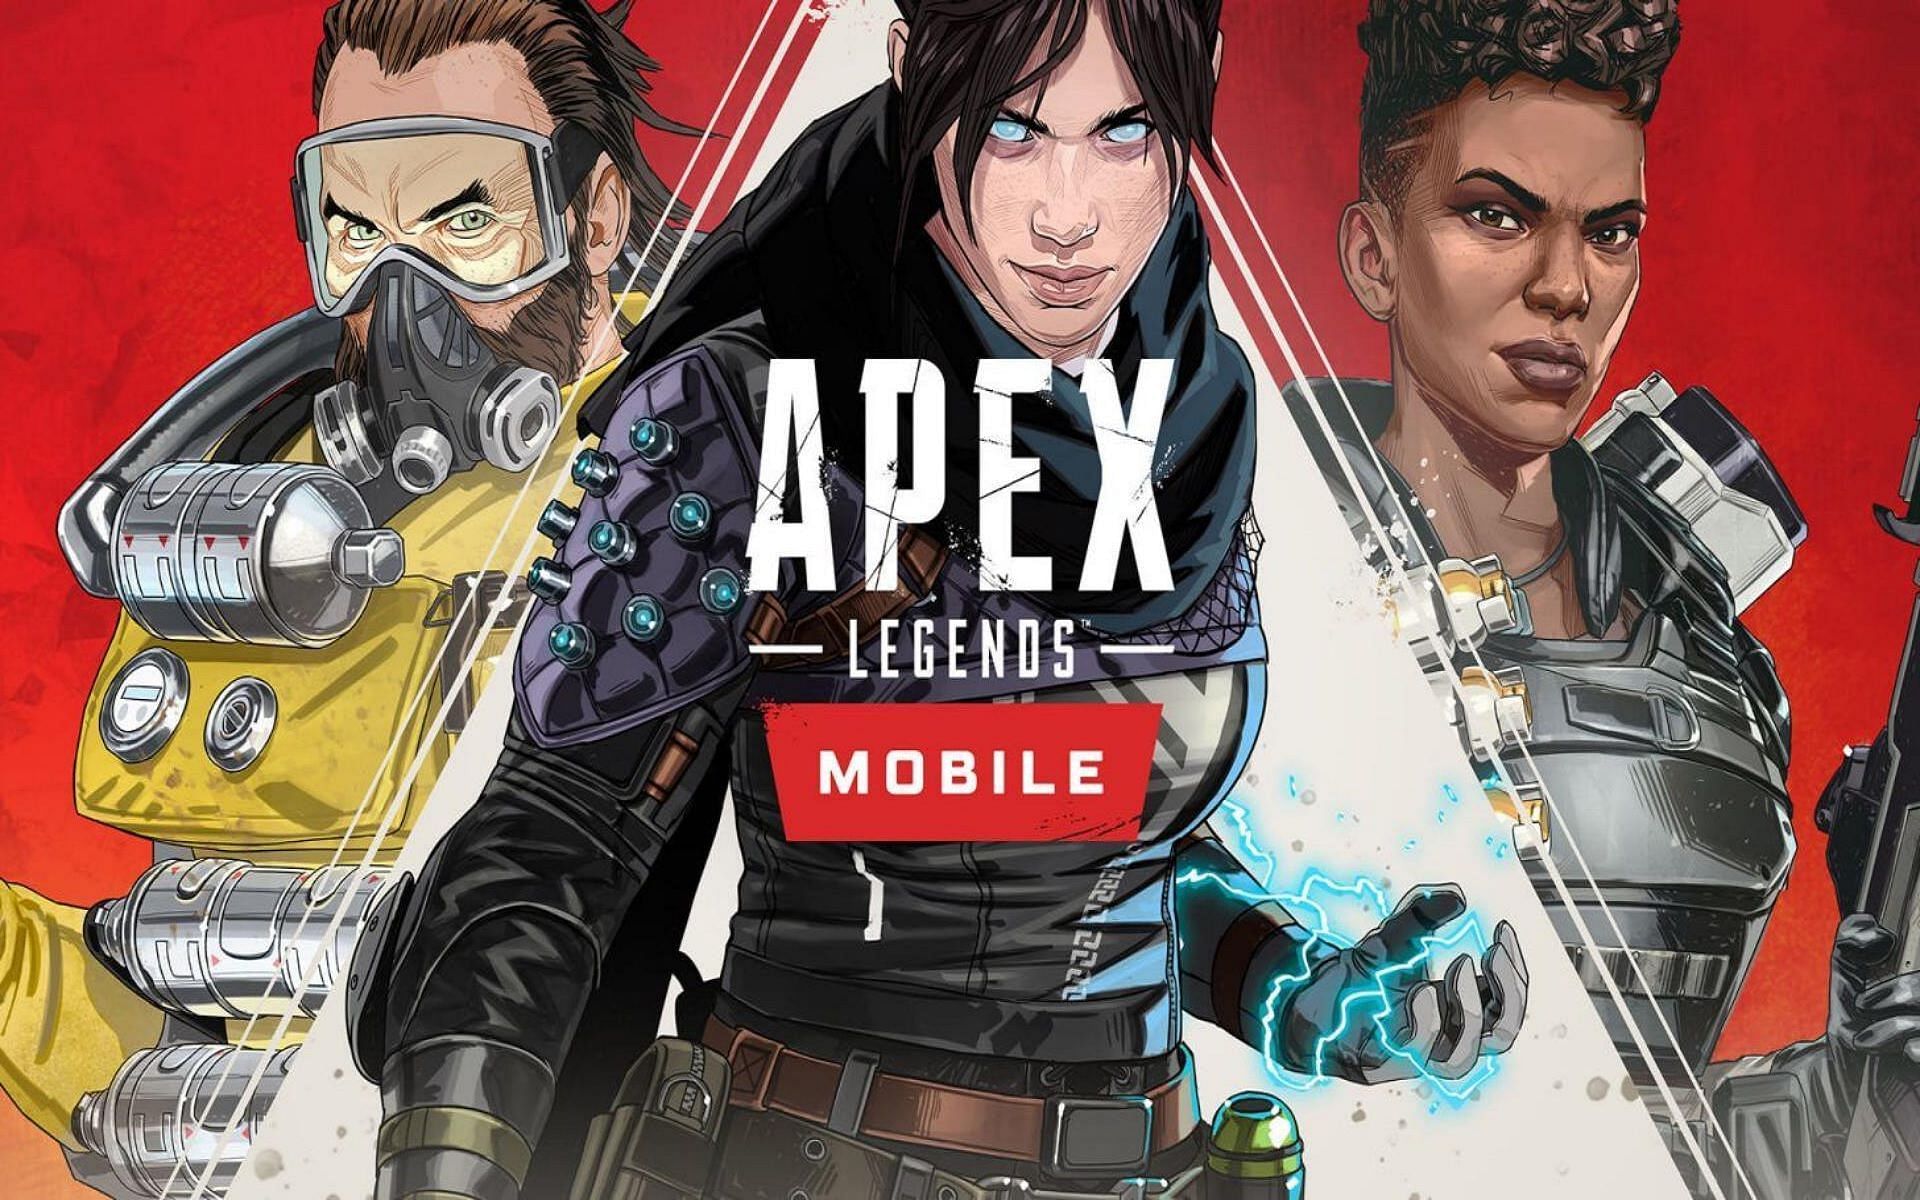 Apex Legends comes to mobile devices (Image via Respawn Entertainment)